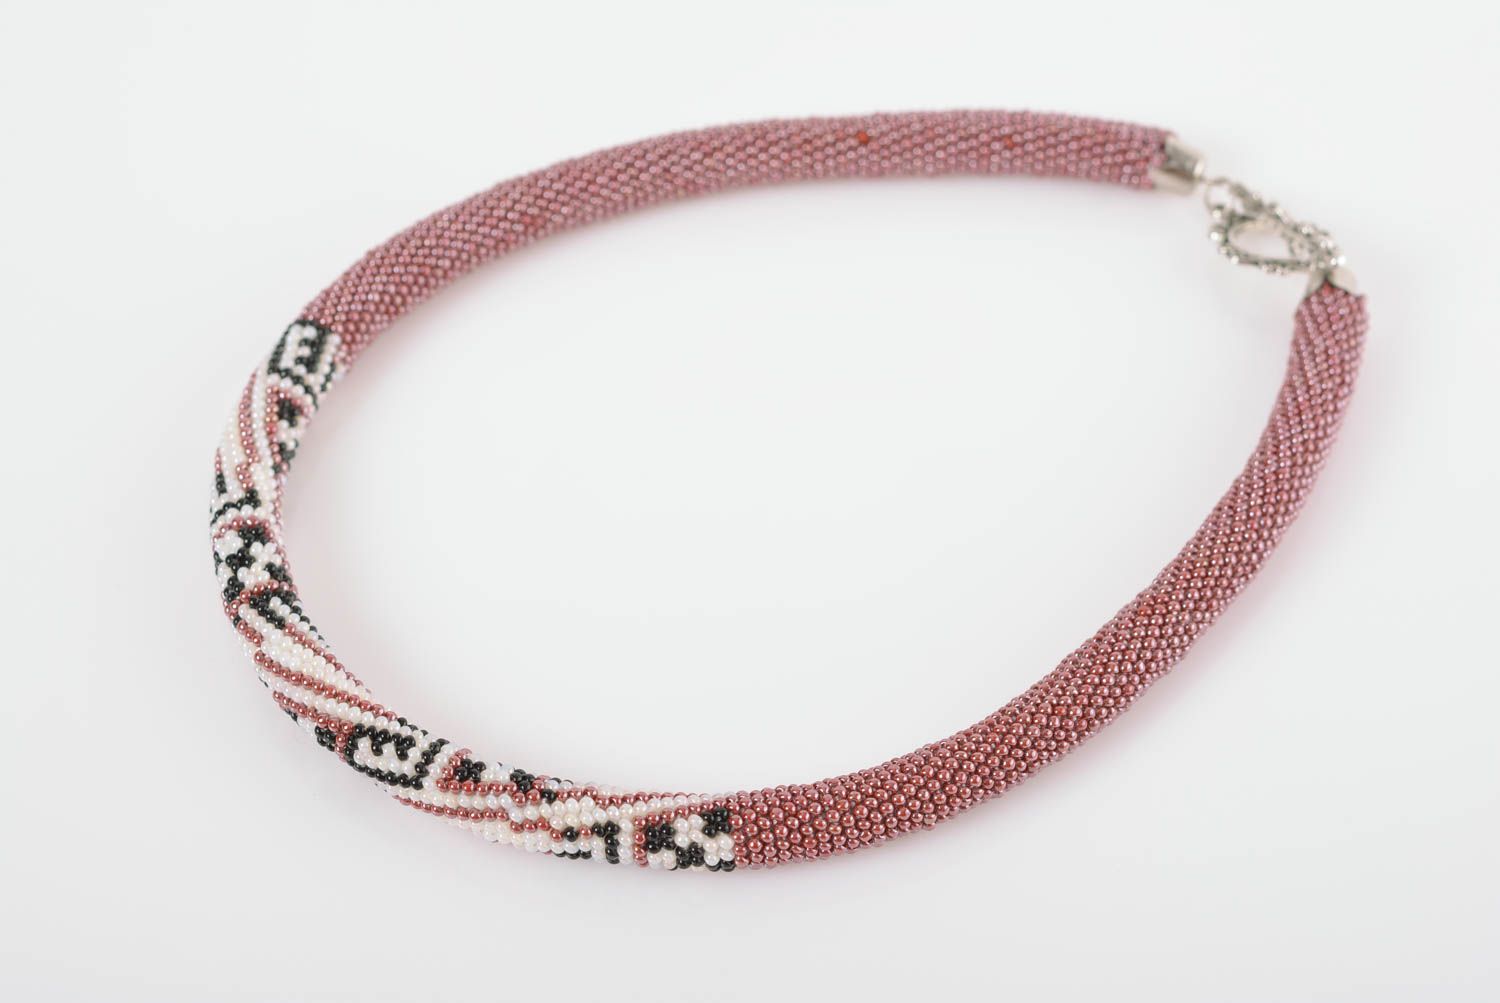 Handmade designer stylish pink beaded cord necklace with geometric ornament photo 1